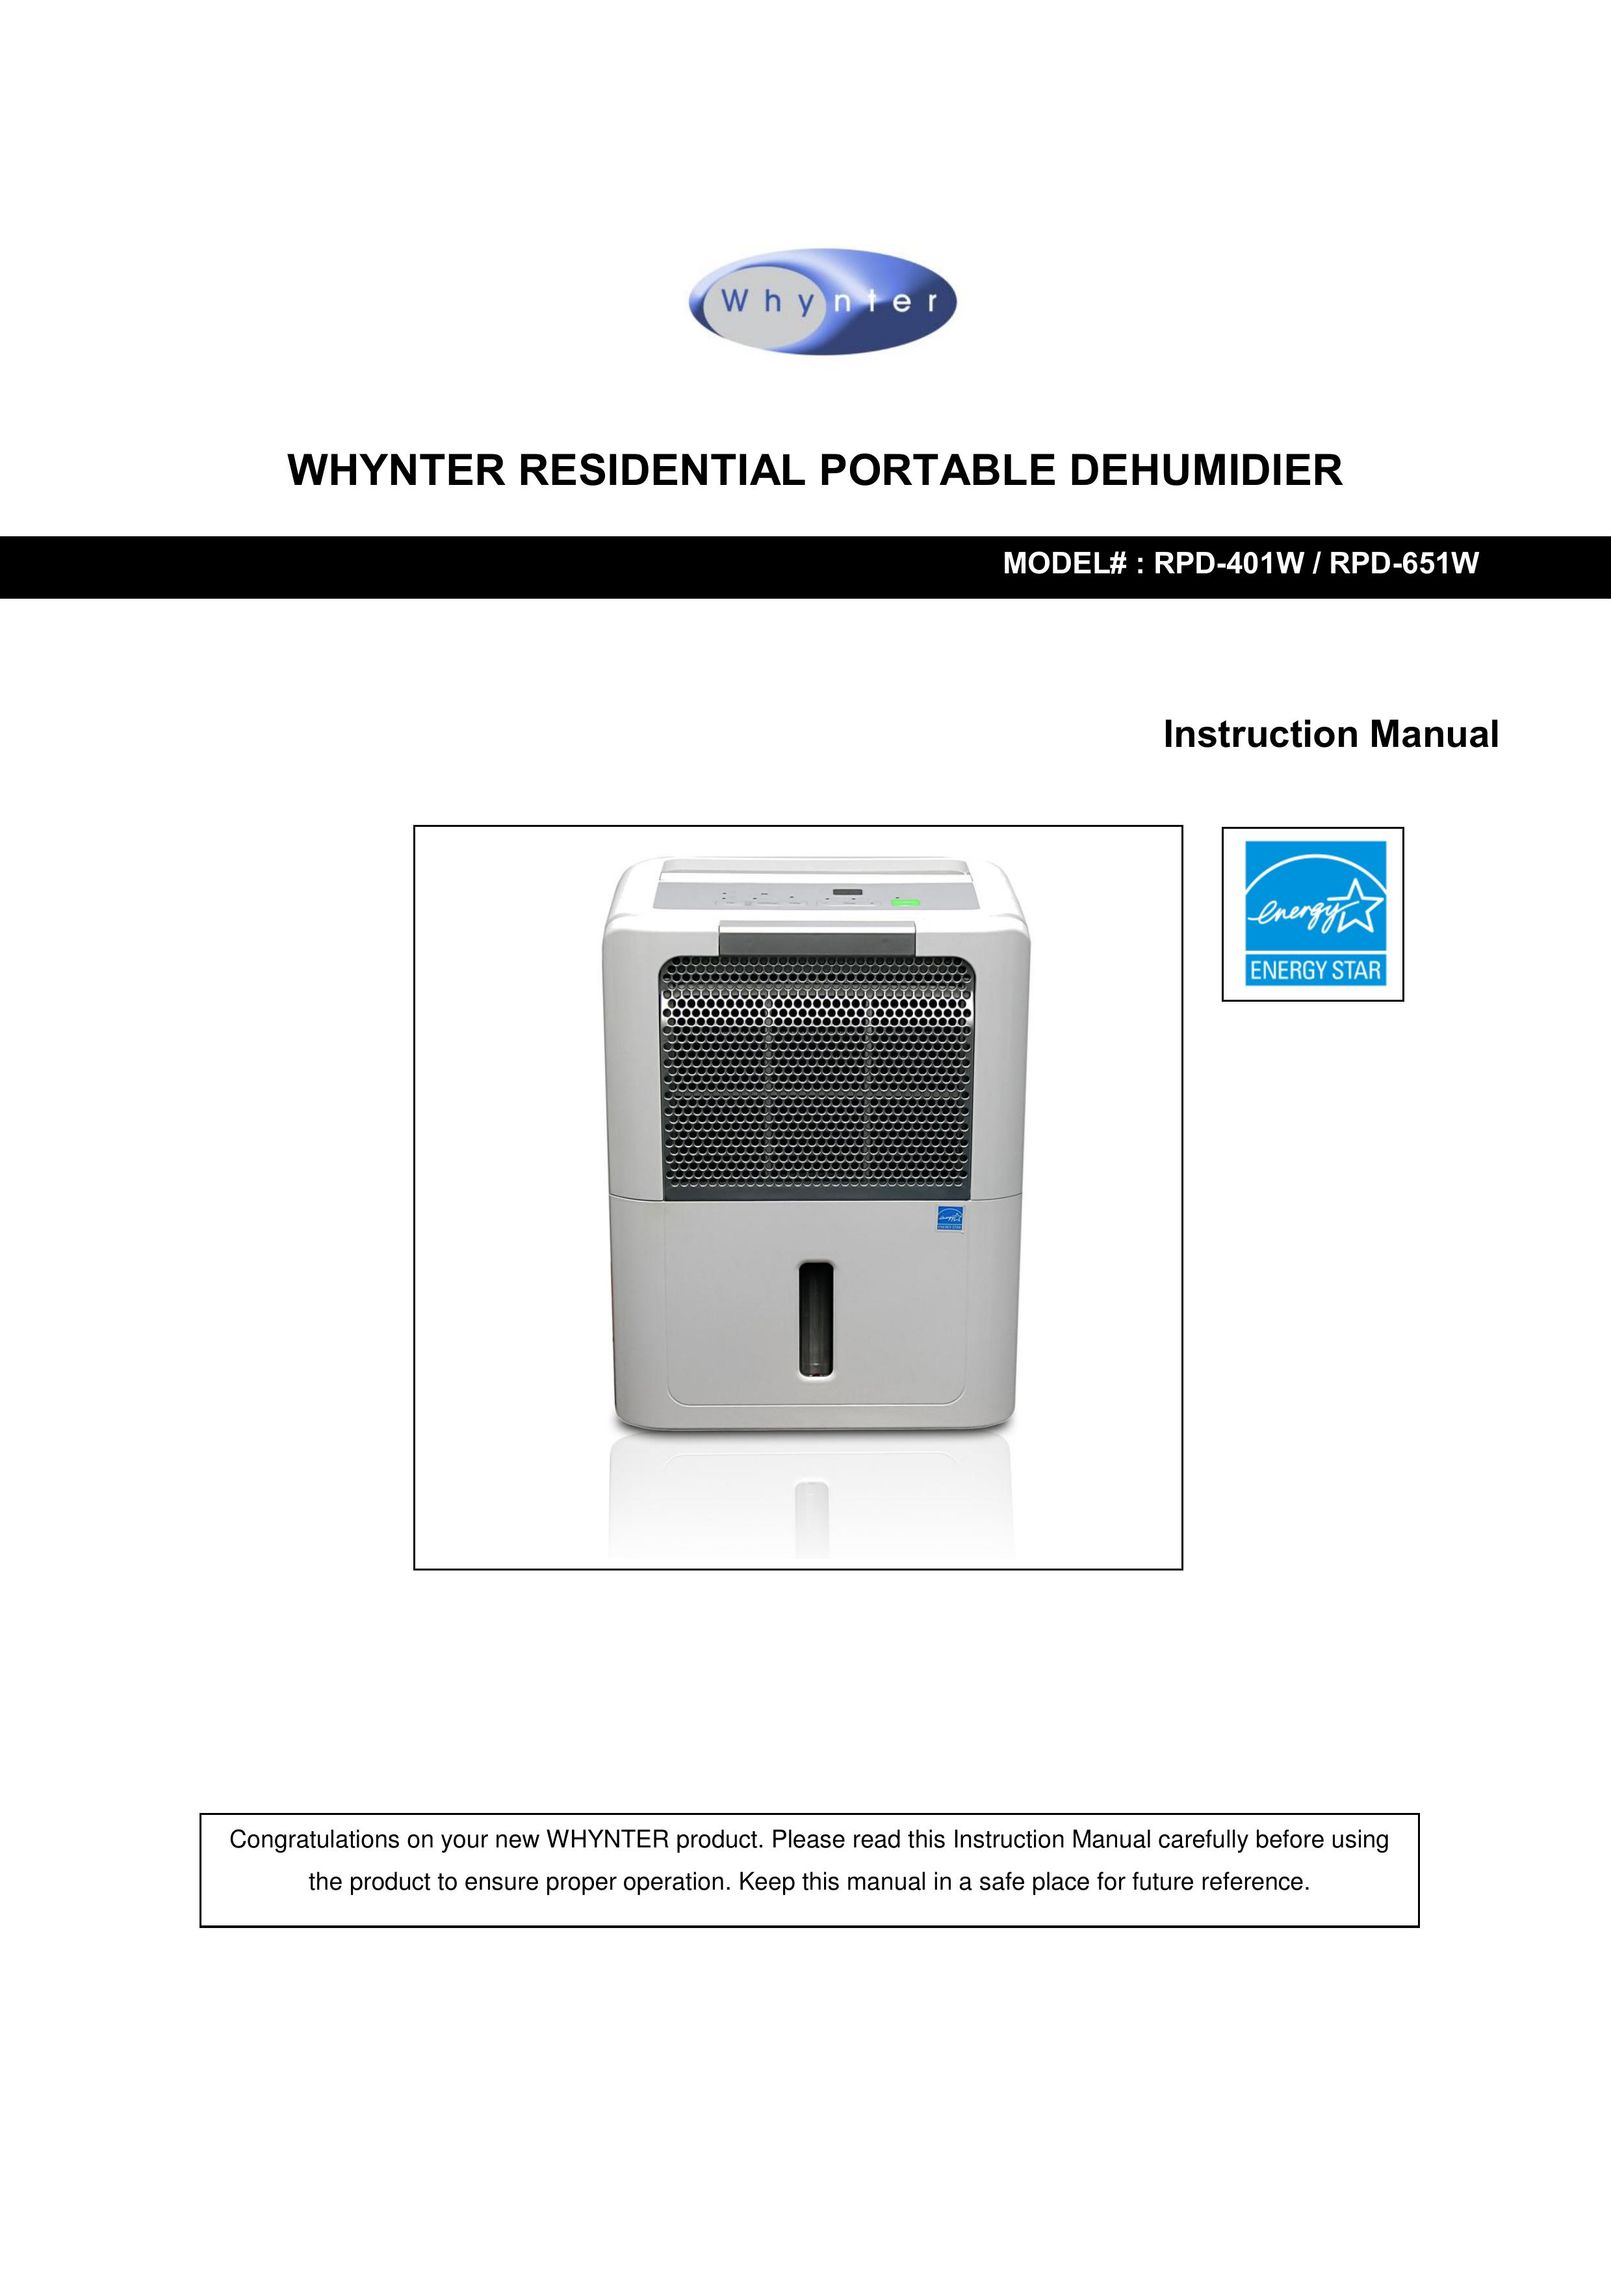 Whynter RPD-651W Dehumidifier User Manual